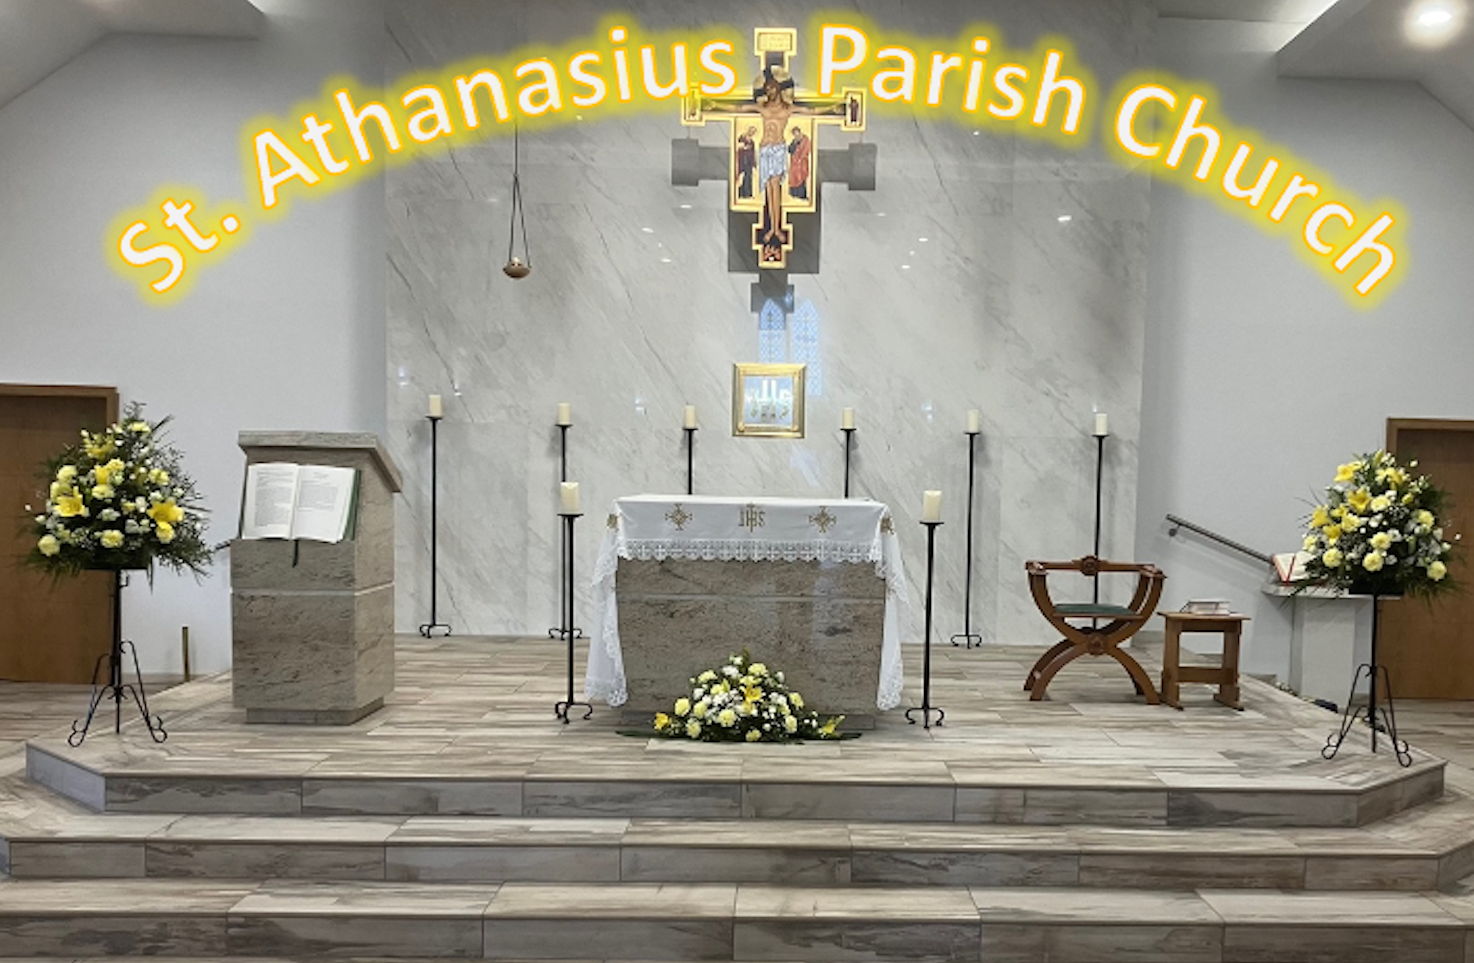 St. Athanasius header image